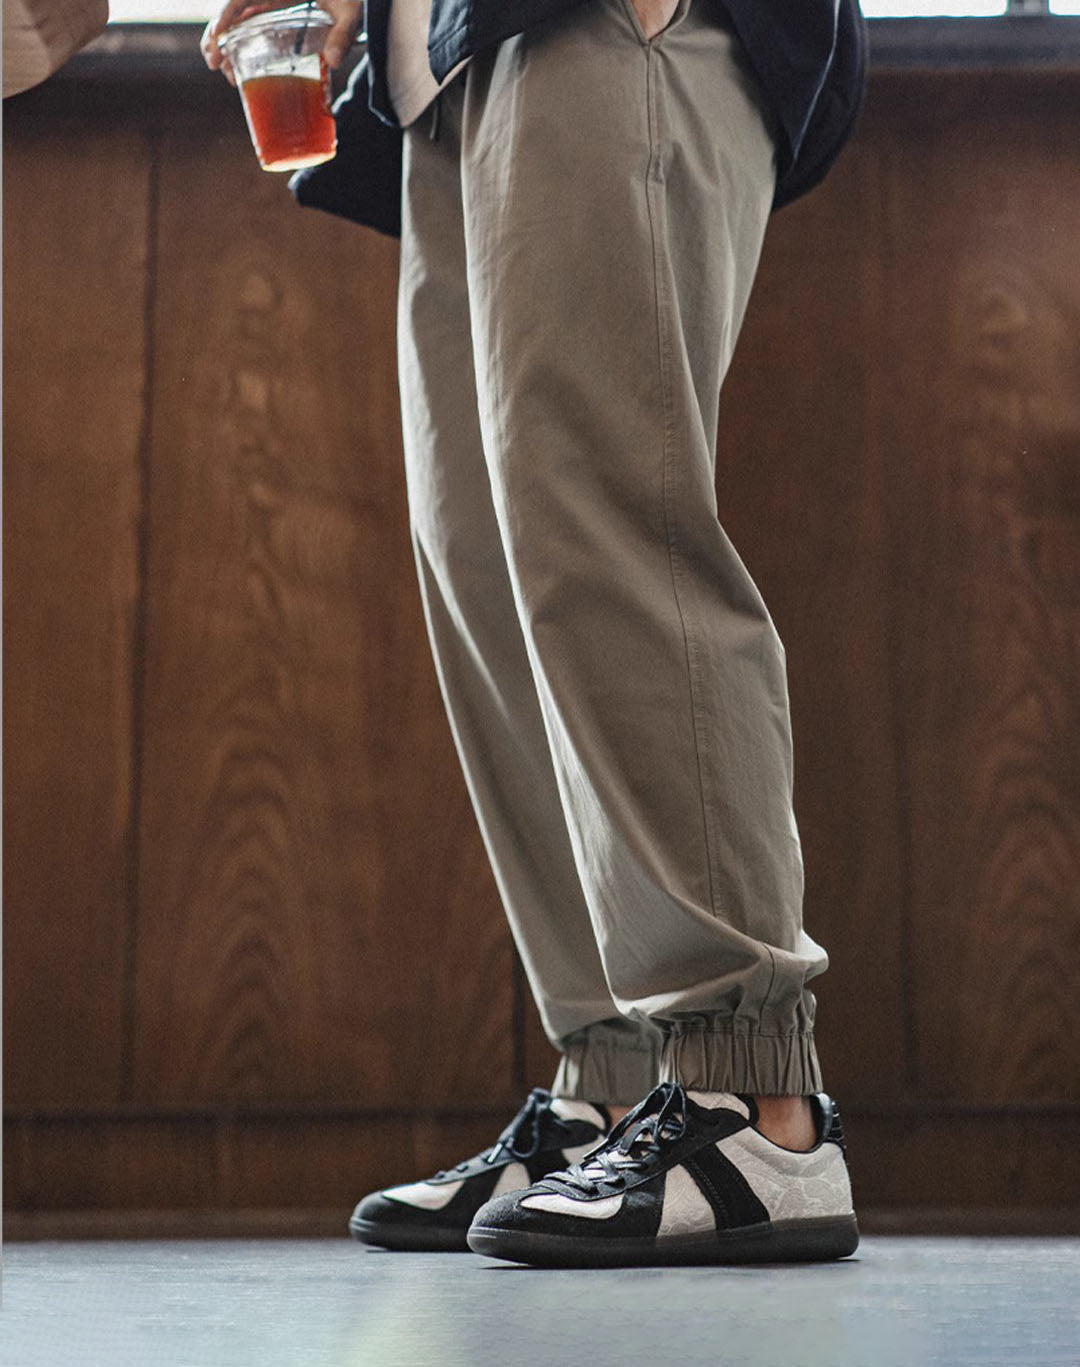 Silk German Retro Sports Versatile Flat Low-top Men's Casual Shoes